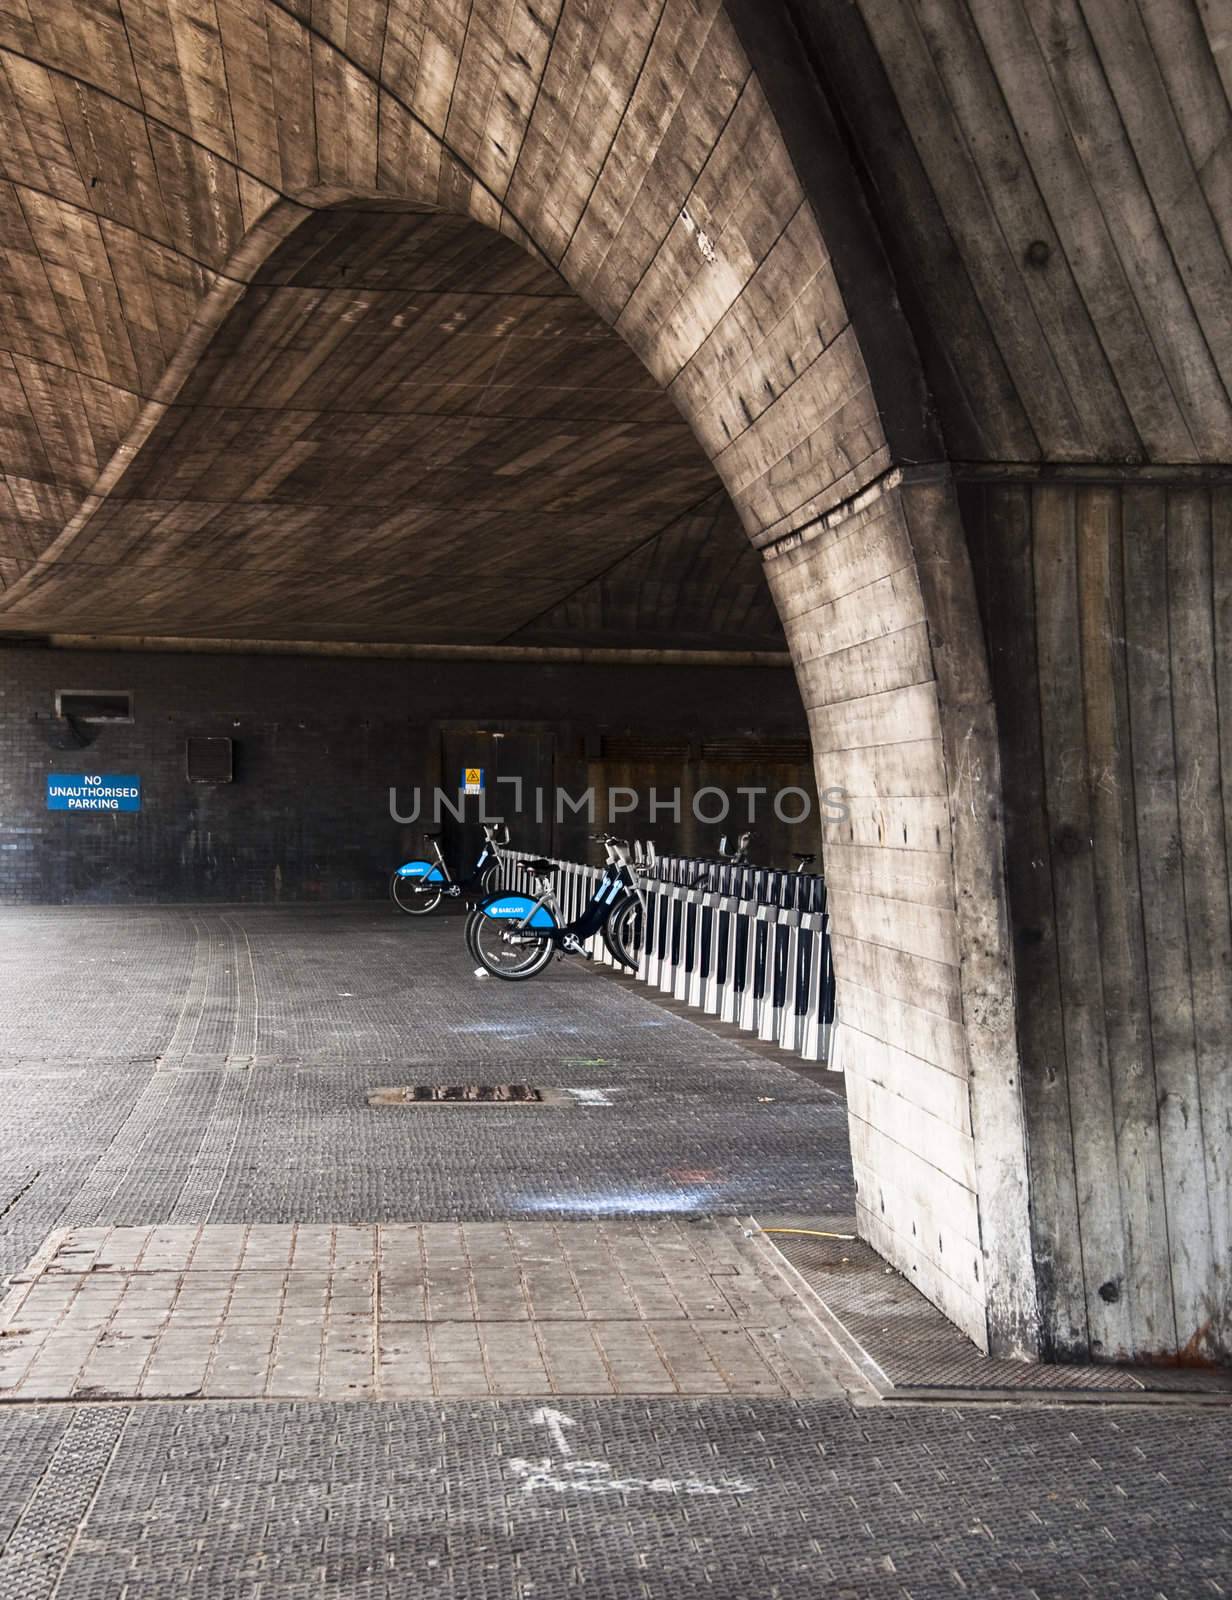 Barclays rental bicycle under a bridge in London, UK